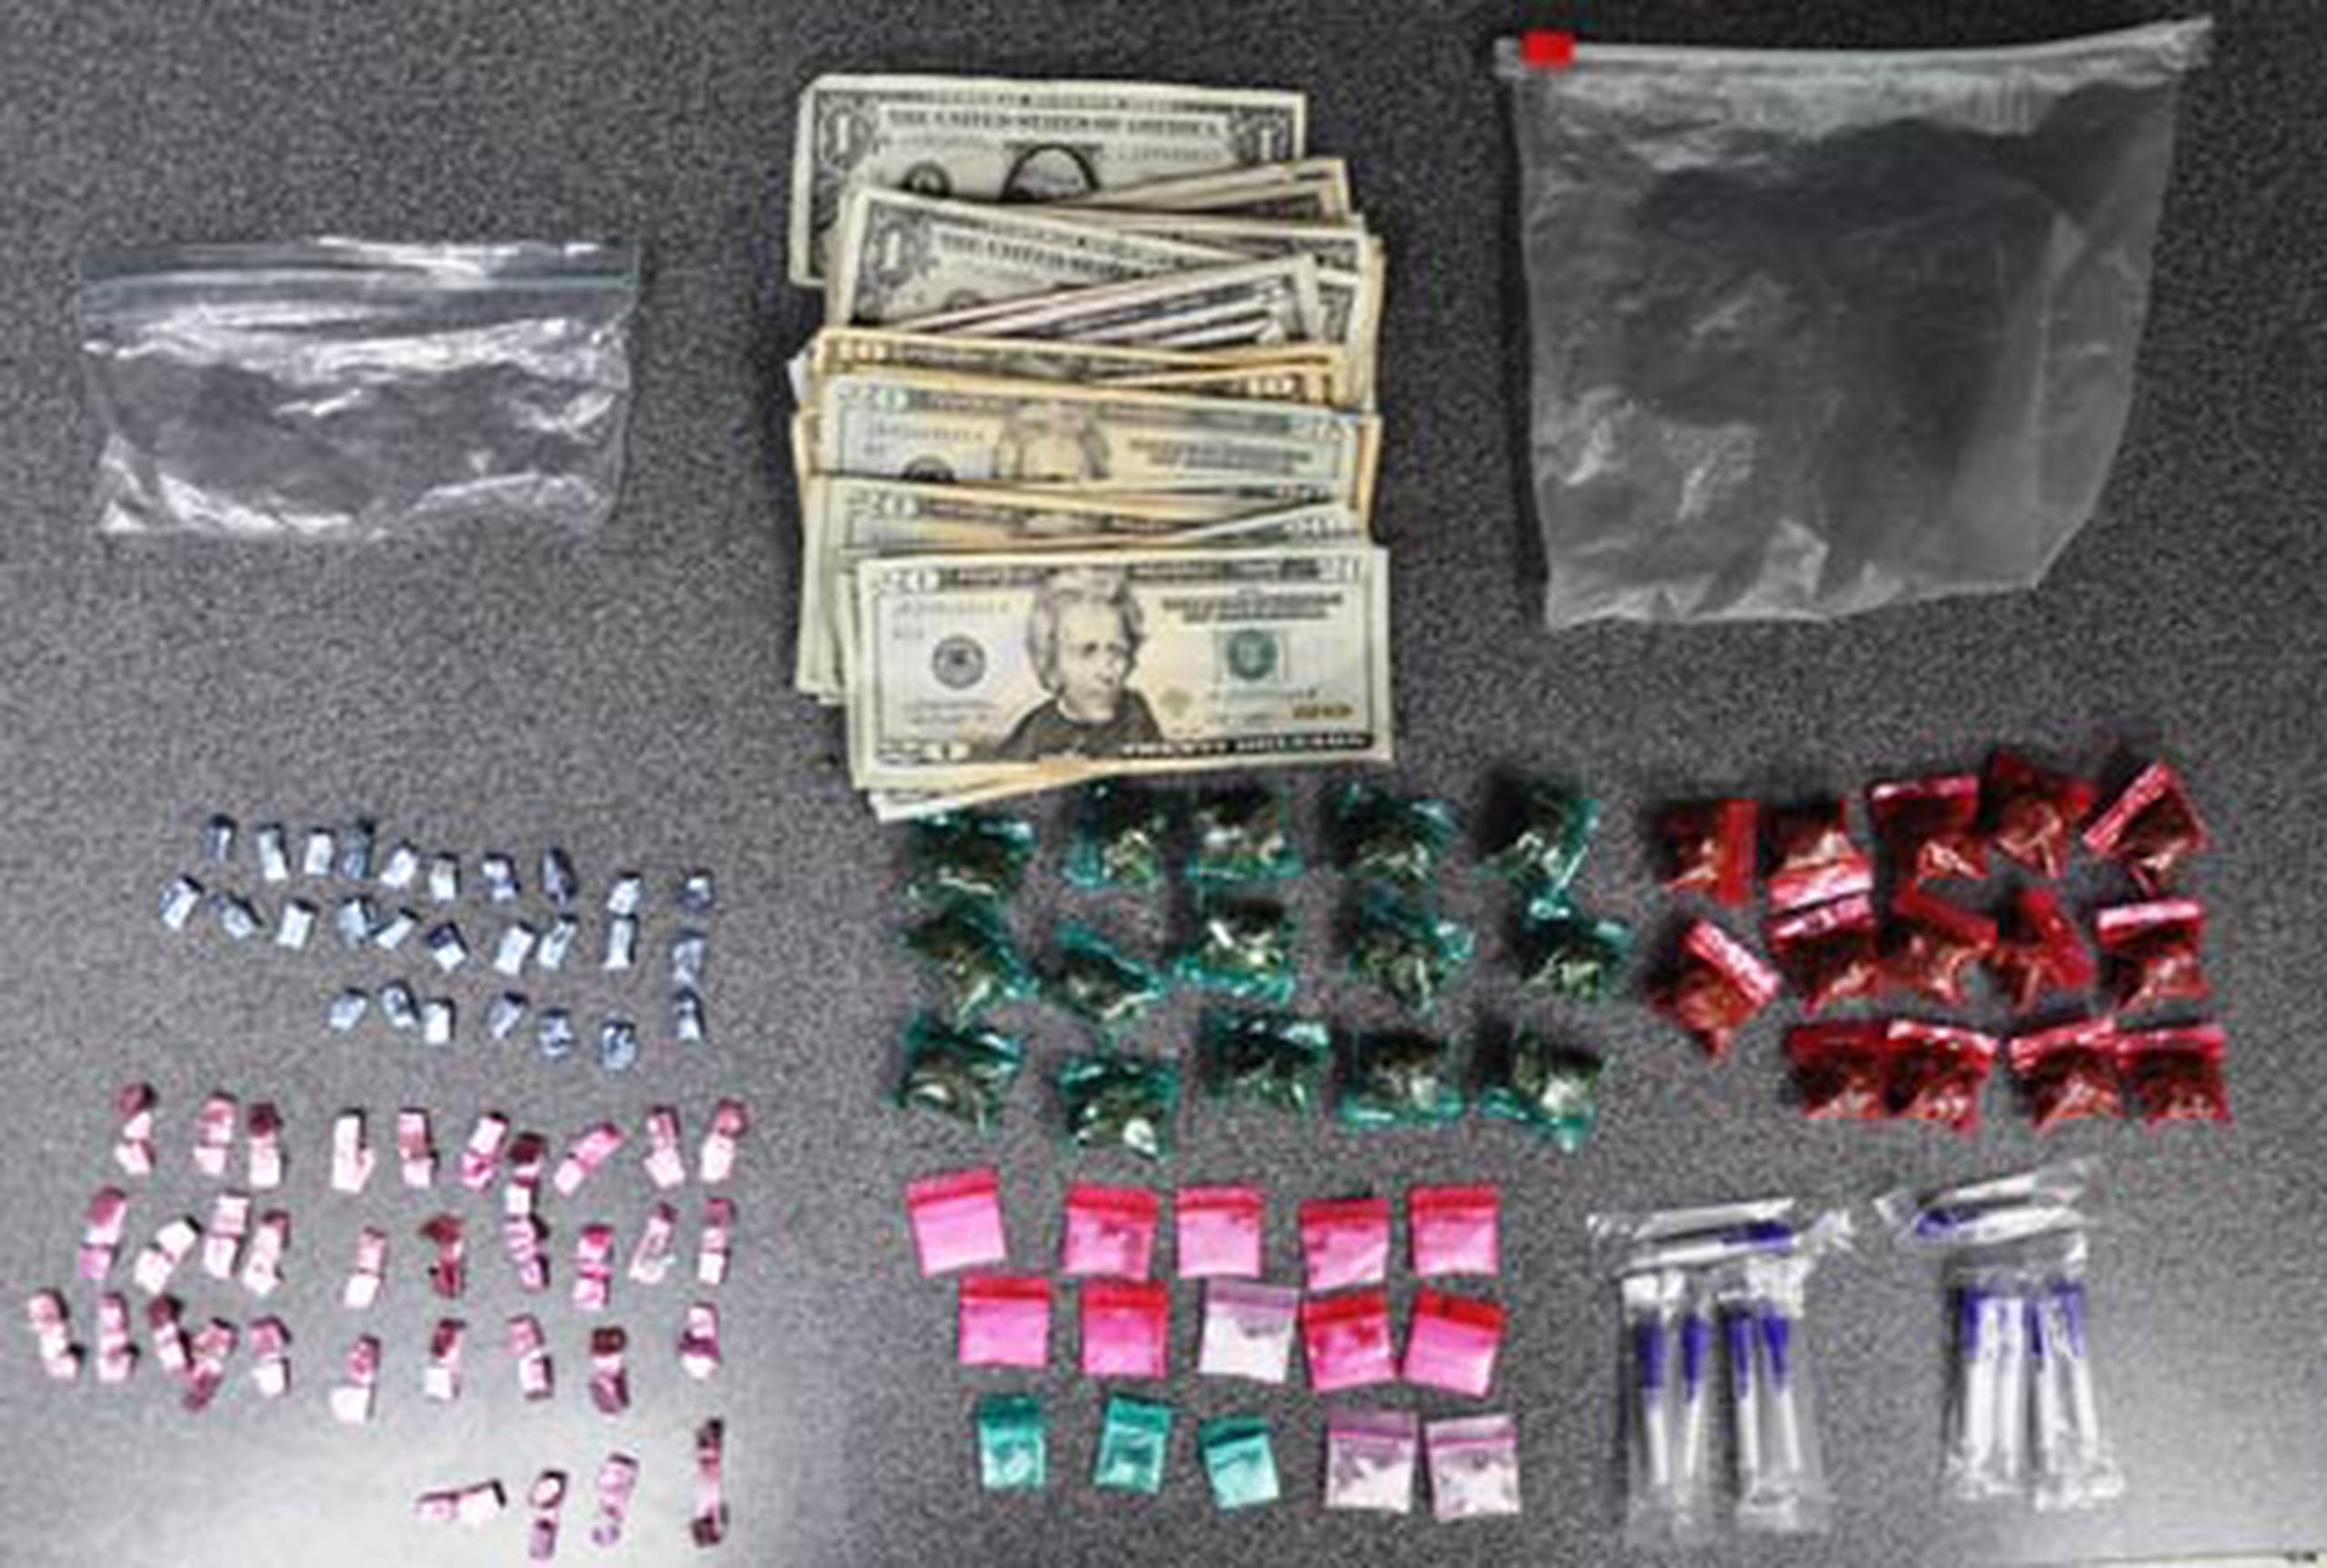 Se ocupó 15 bolsas de Cocaína, 61 decks de Heroína, 29 bolsas de Marihuana y 12 capsulas de Crack además de $315.00 dólares en efectivos. (Suministrada)